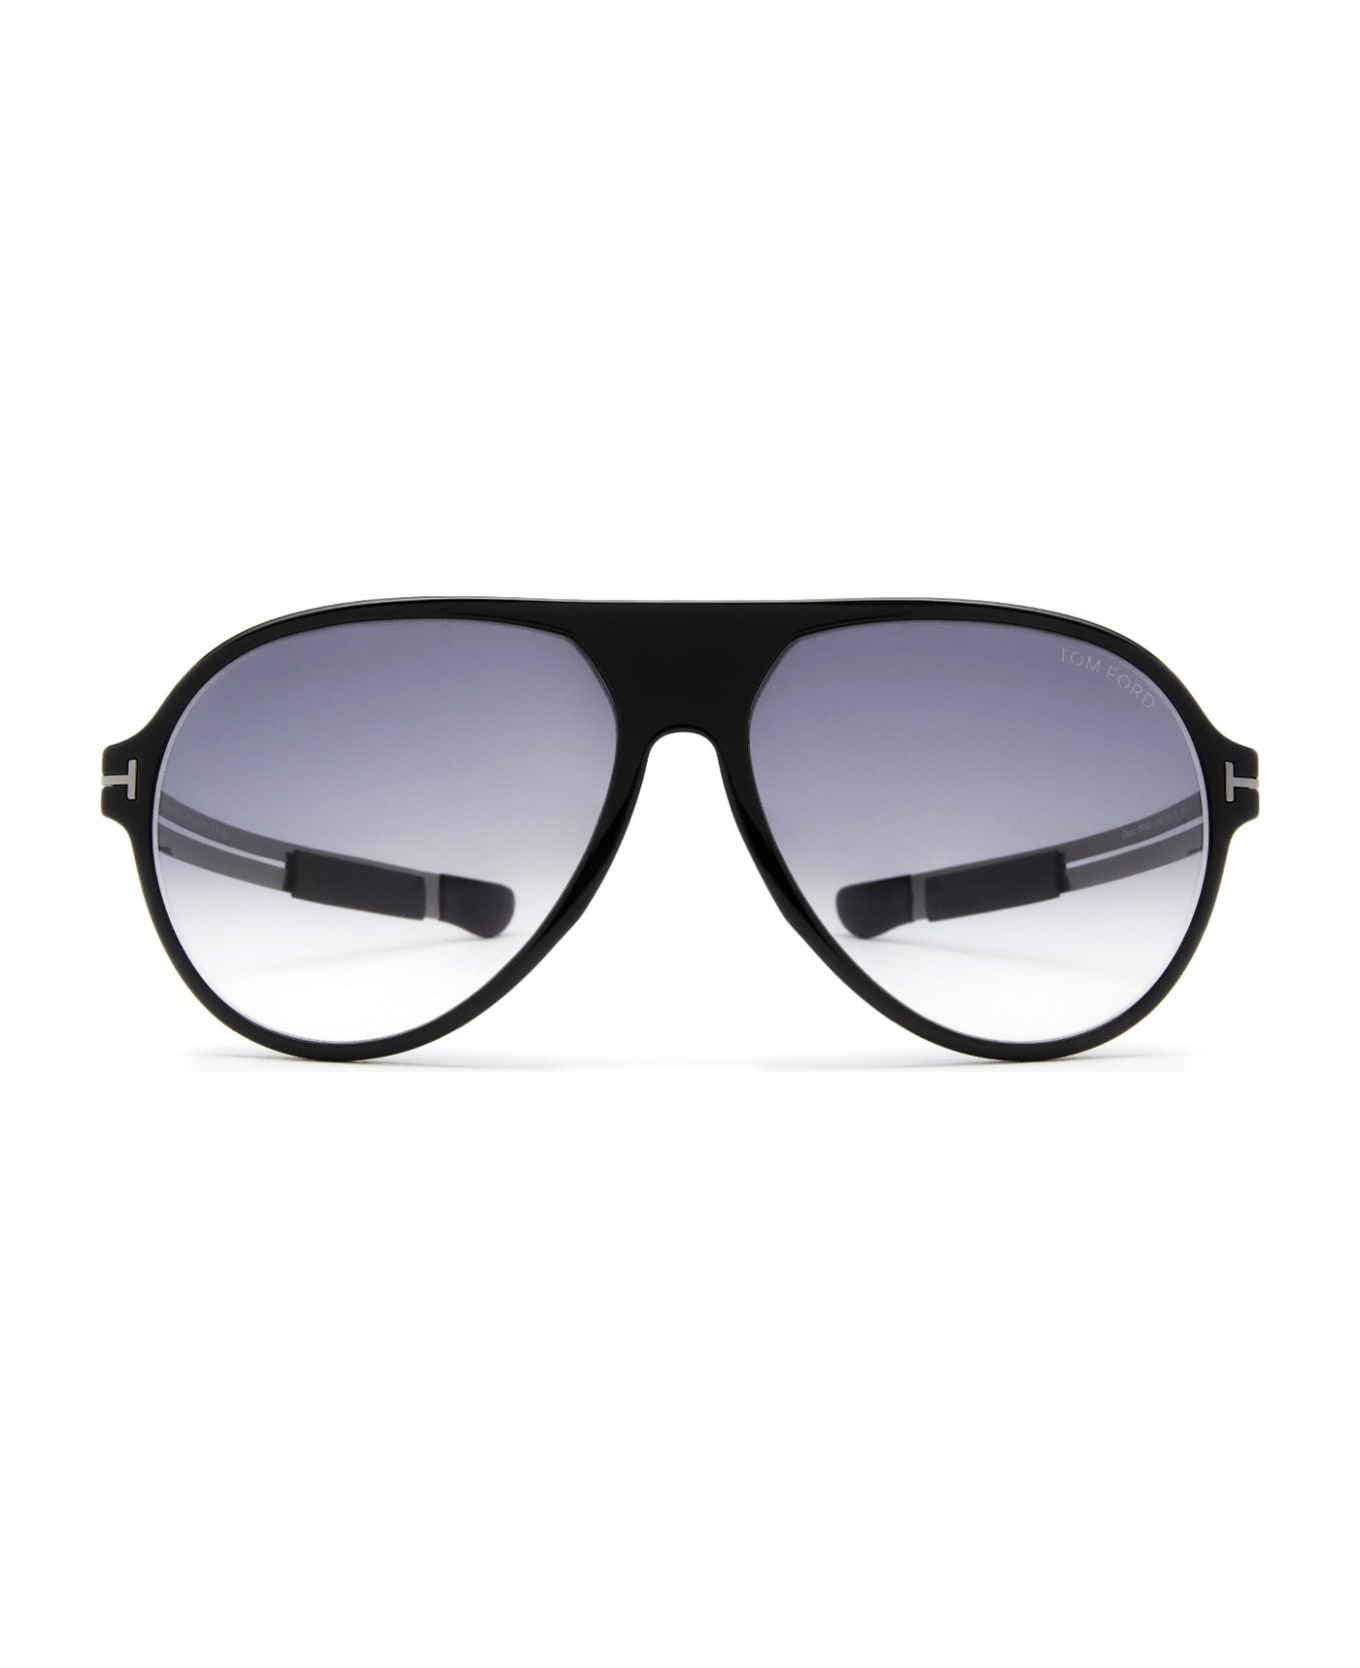 Tom Ford Eyewear Ft0881 Black Sunglasses - Black